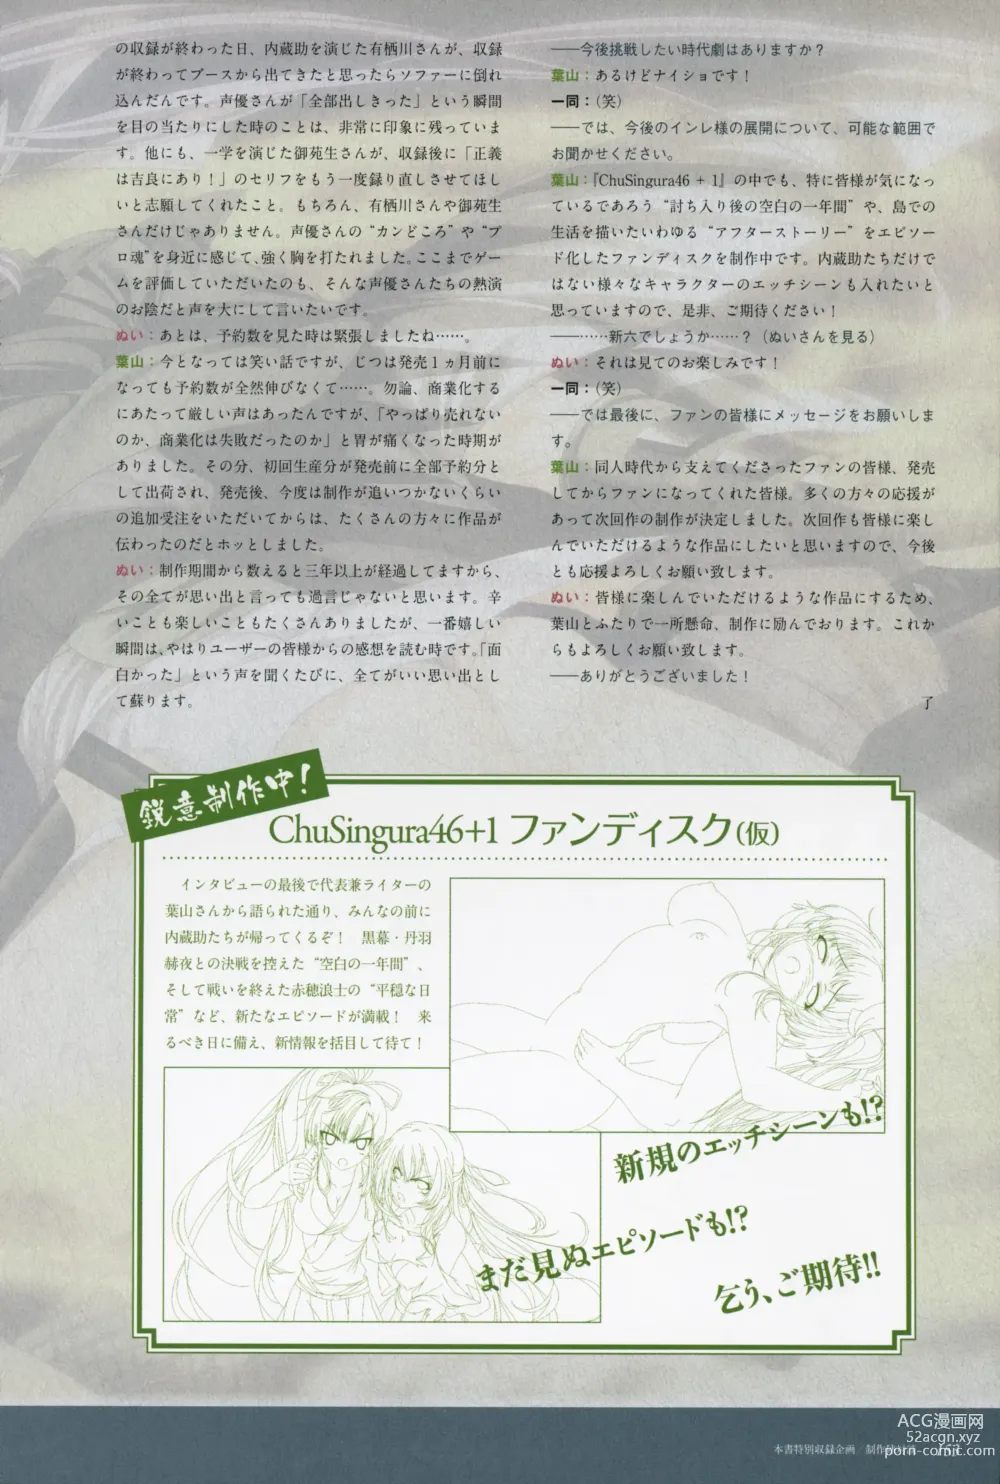 Page 155 of manga ChuSinGura 46+1 Official Visual Fan Book